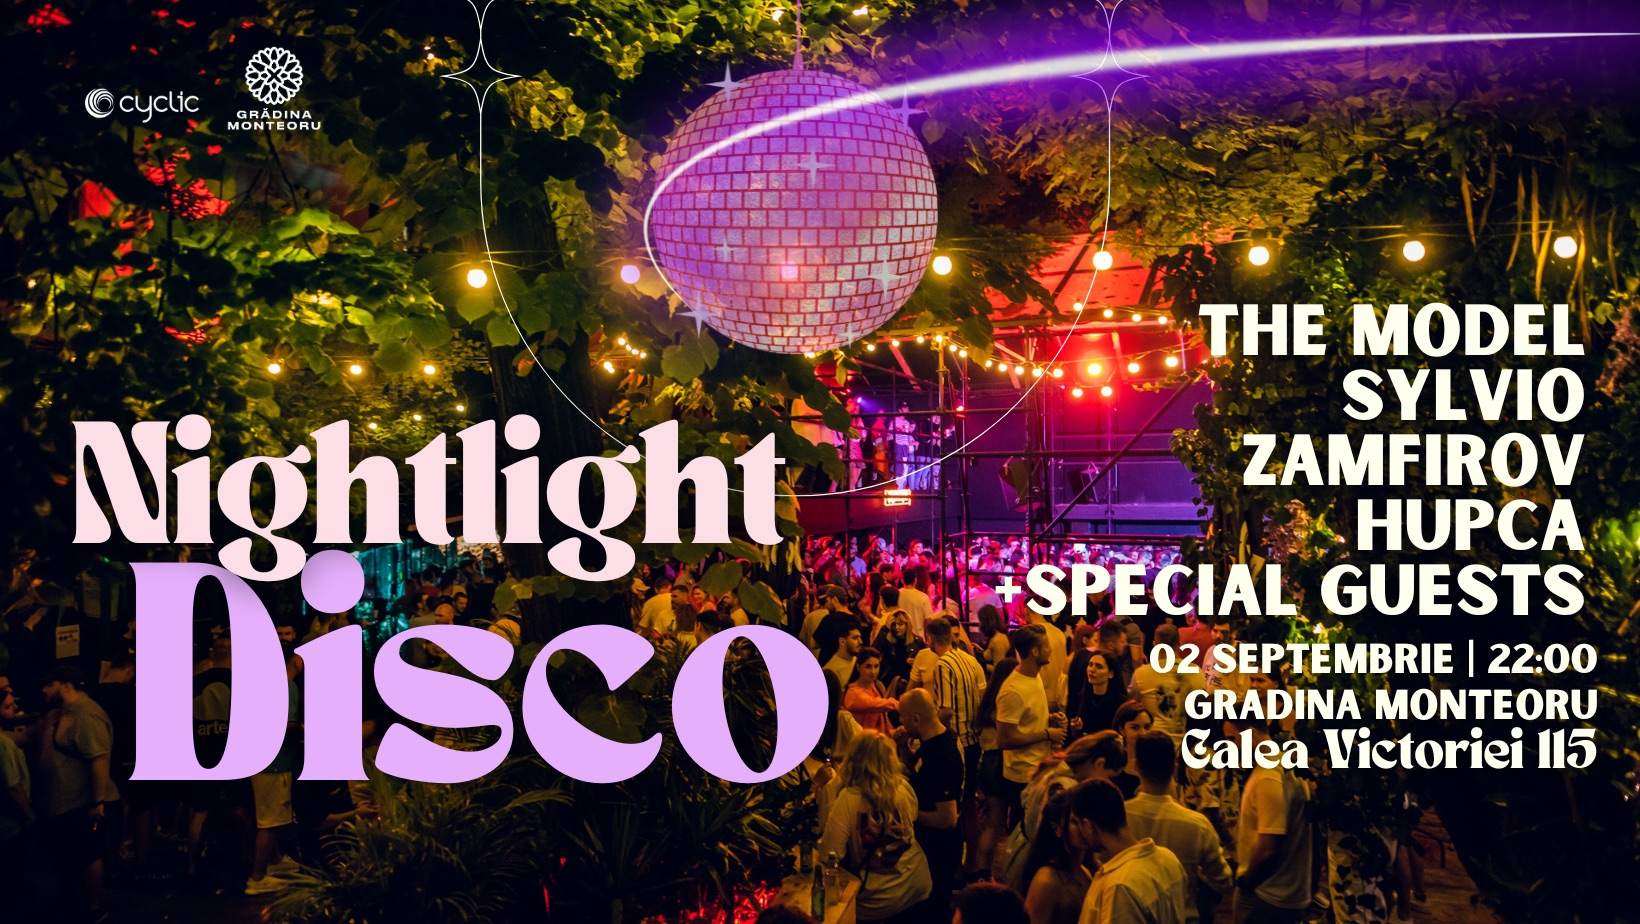 Nightlight disco with The Model, Sylvio, Zamfirov, Hupca, + Special guest - Página frontal